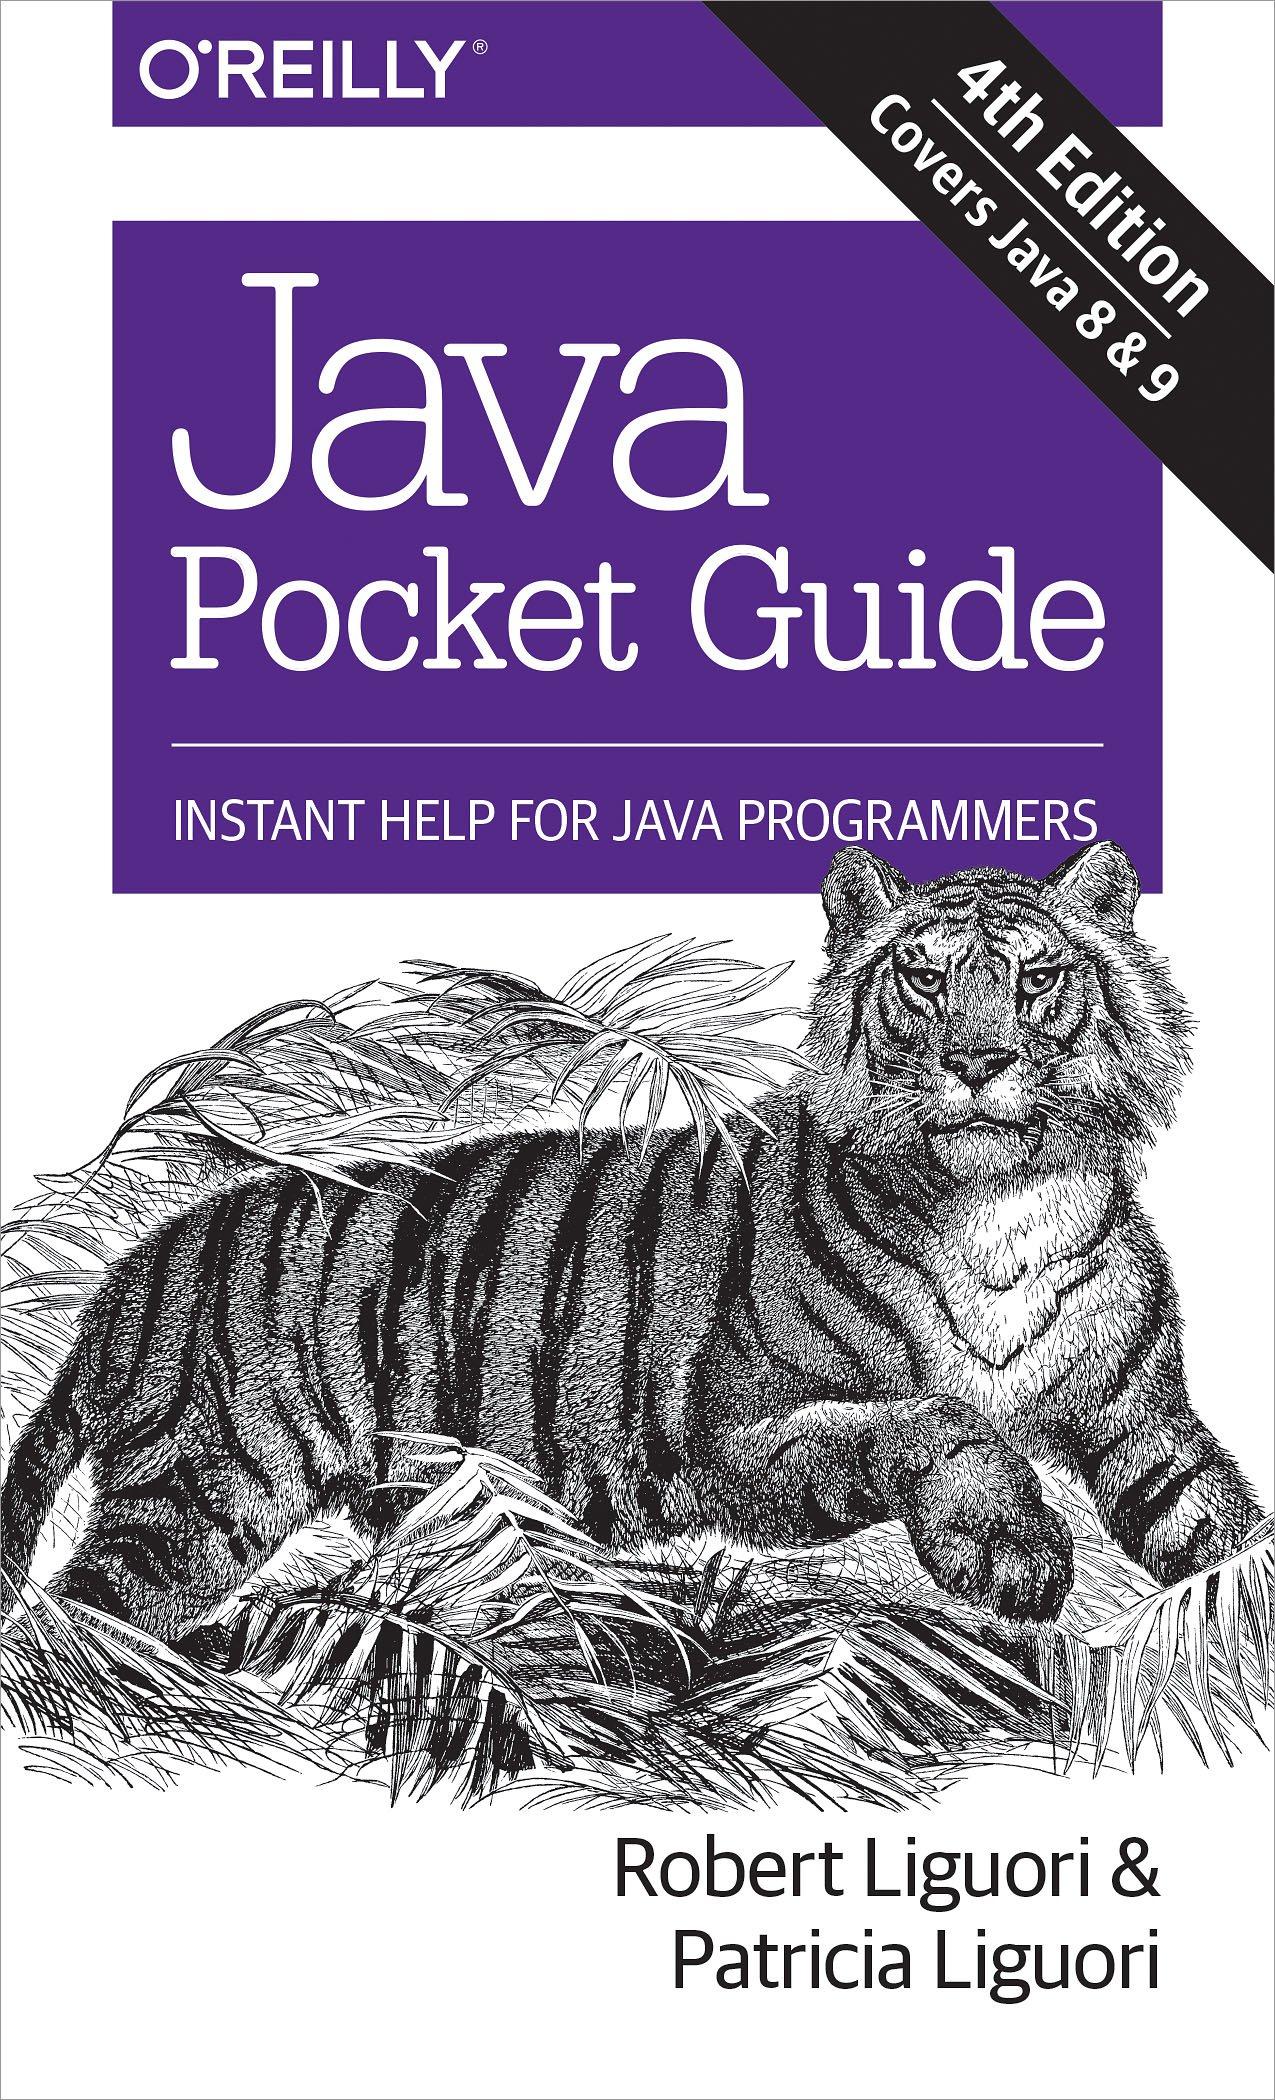 java pocket guide instant help for java programmers 4th edition robert liguori ,patricia liguori 1491938692,